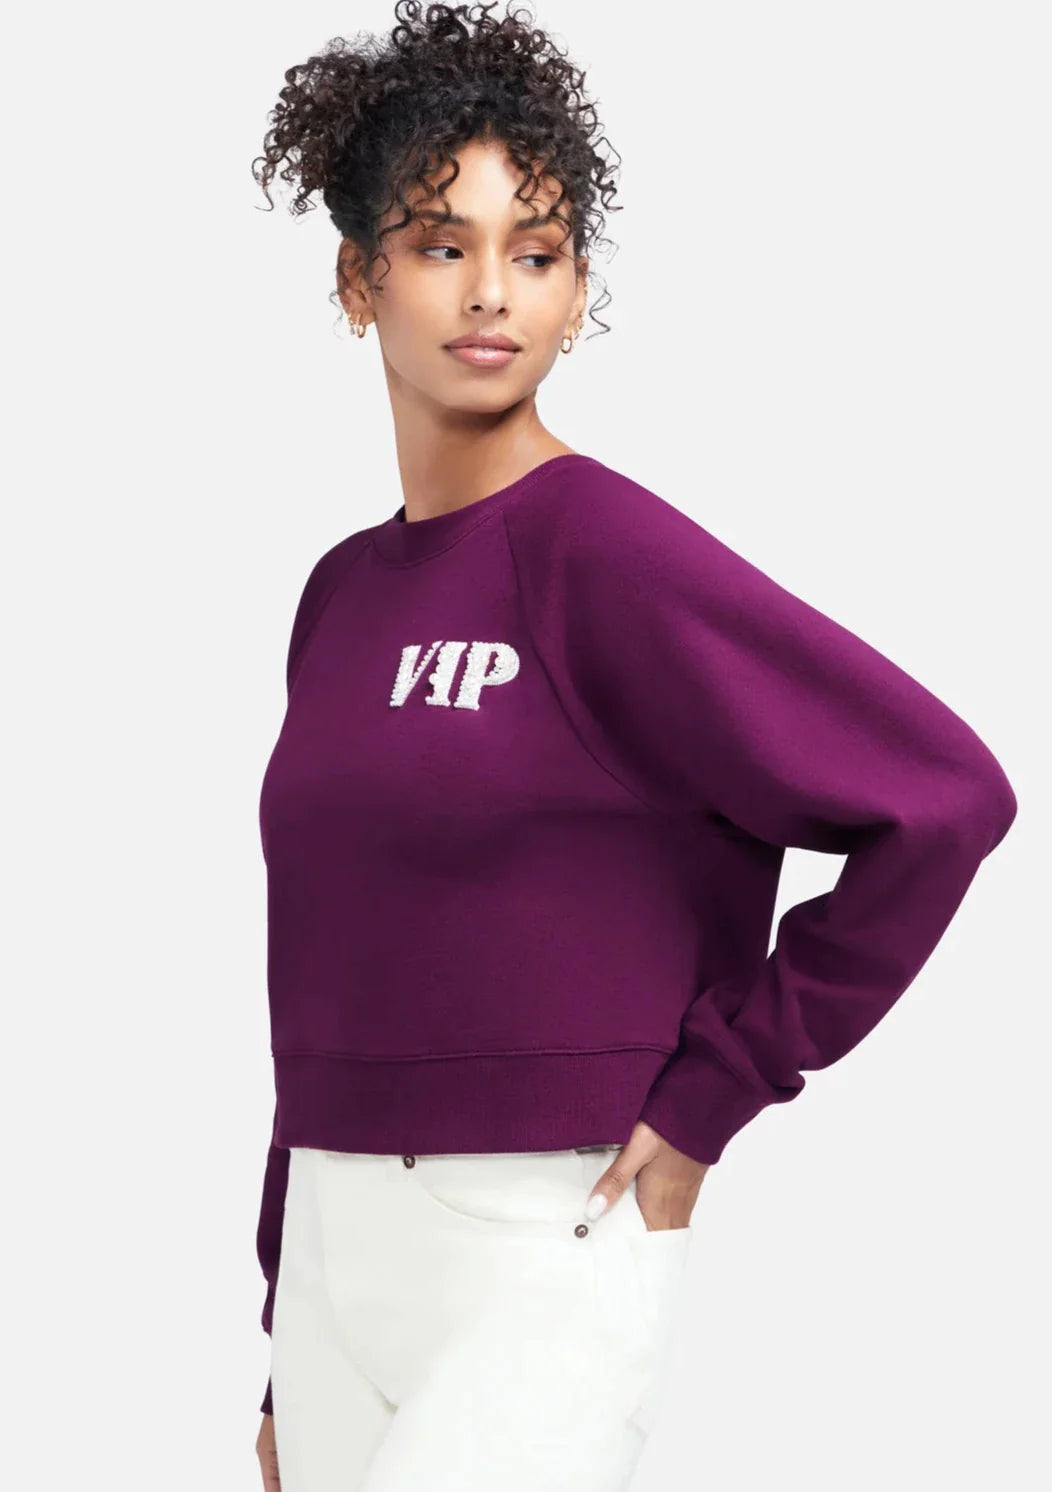 WILDFOX “VIP” Raglan Pullover Sweater - Dark Purple